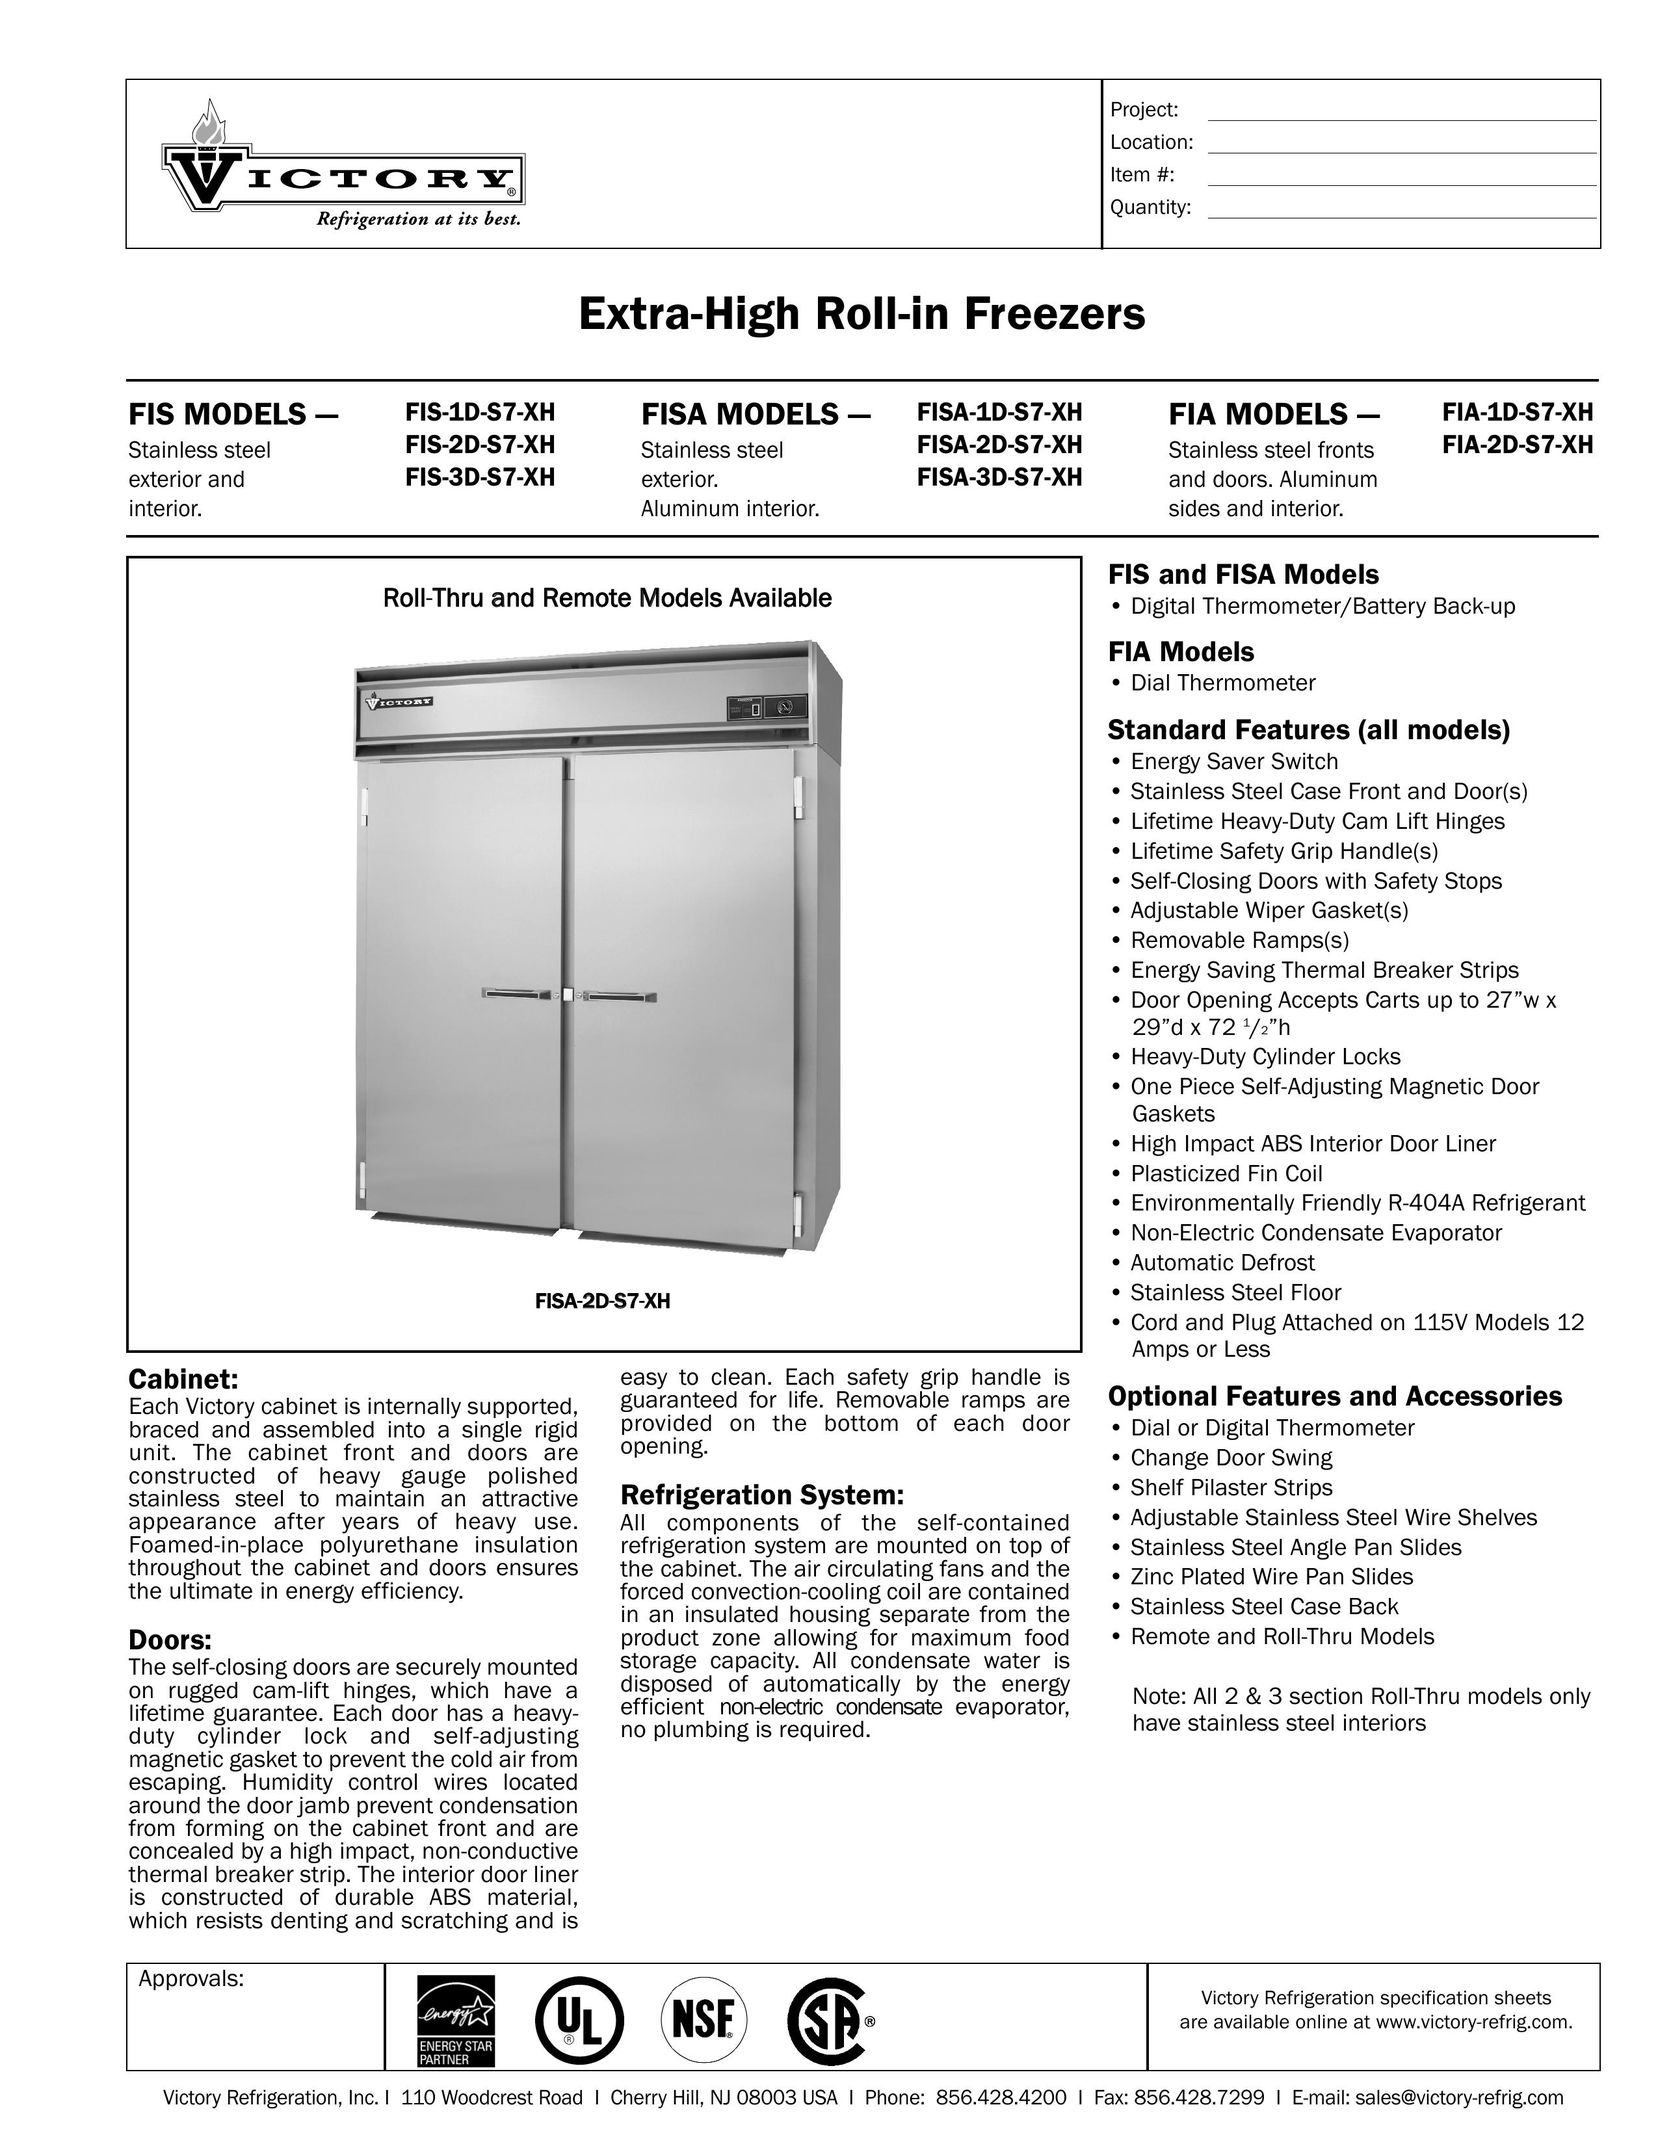 Victory Refrigeration FISA-1D-S7-XH Freezer User Manual